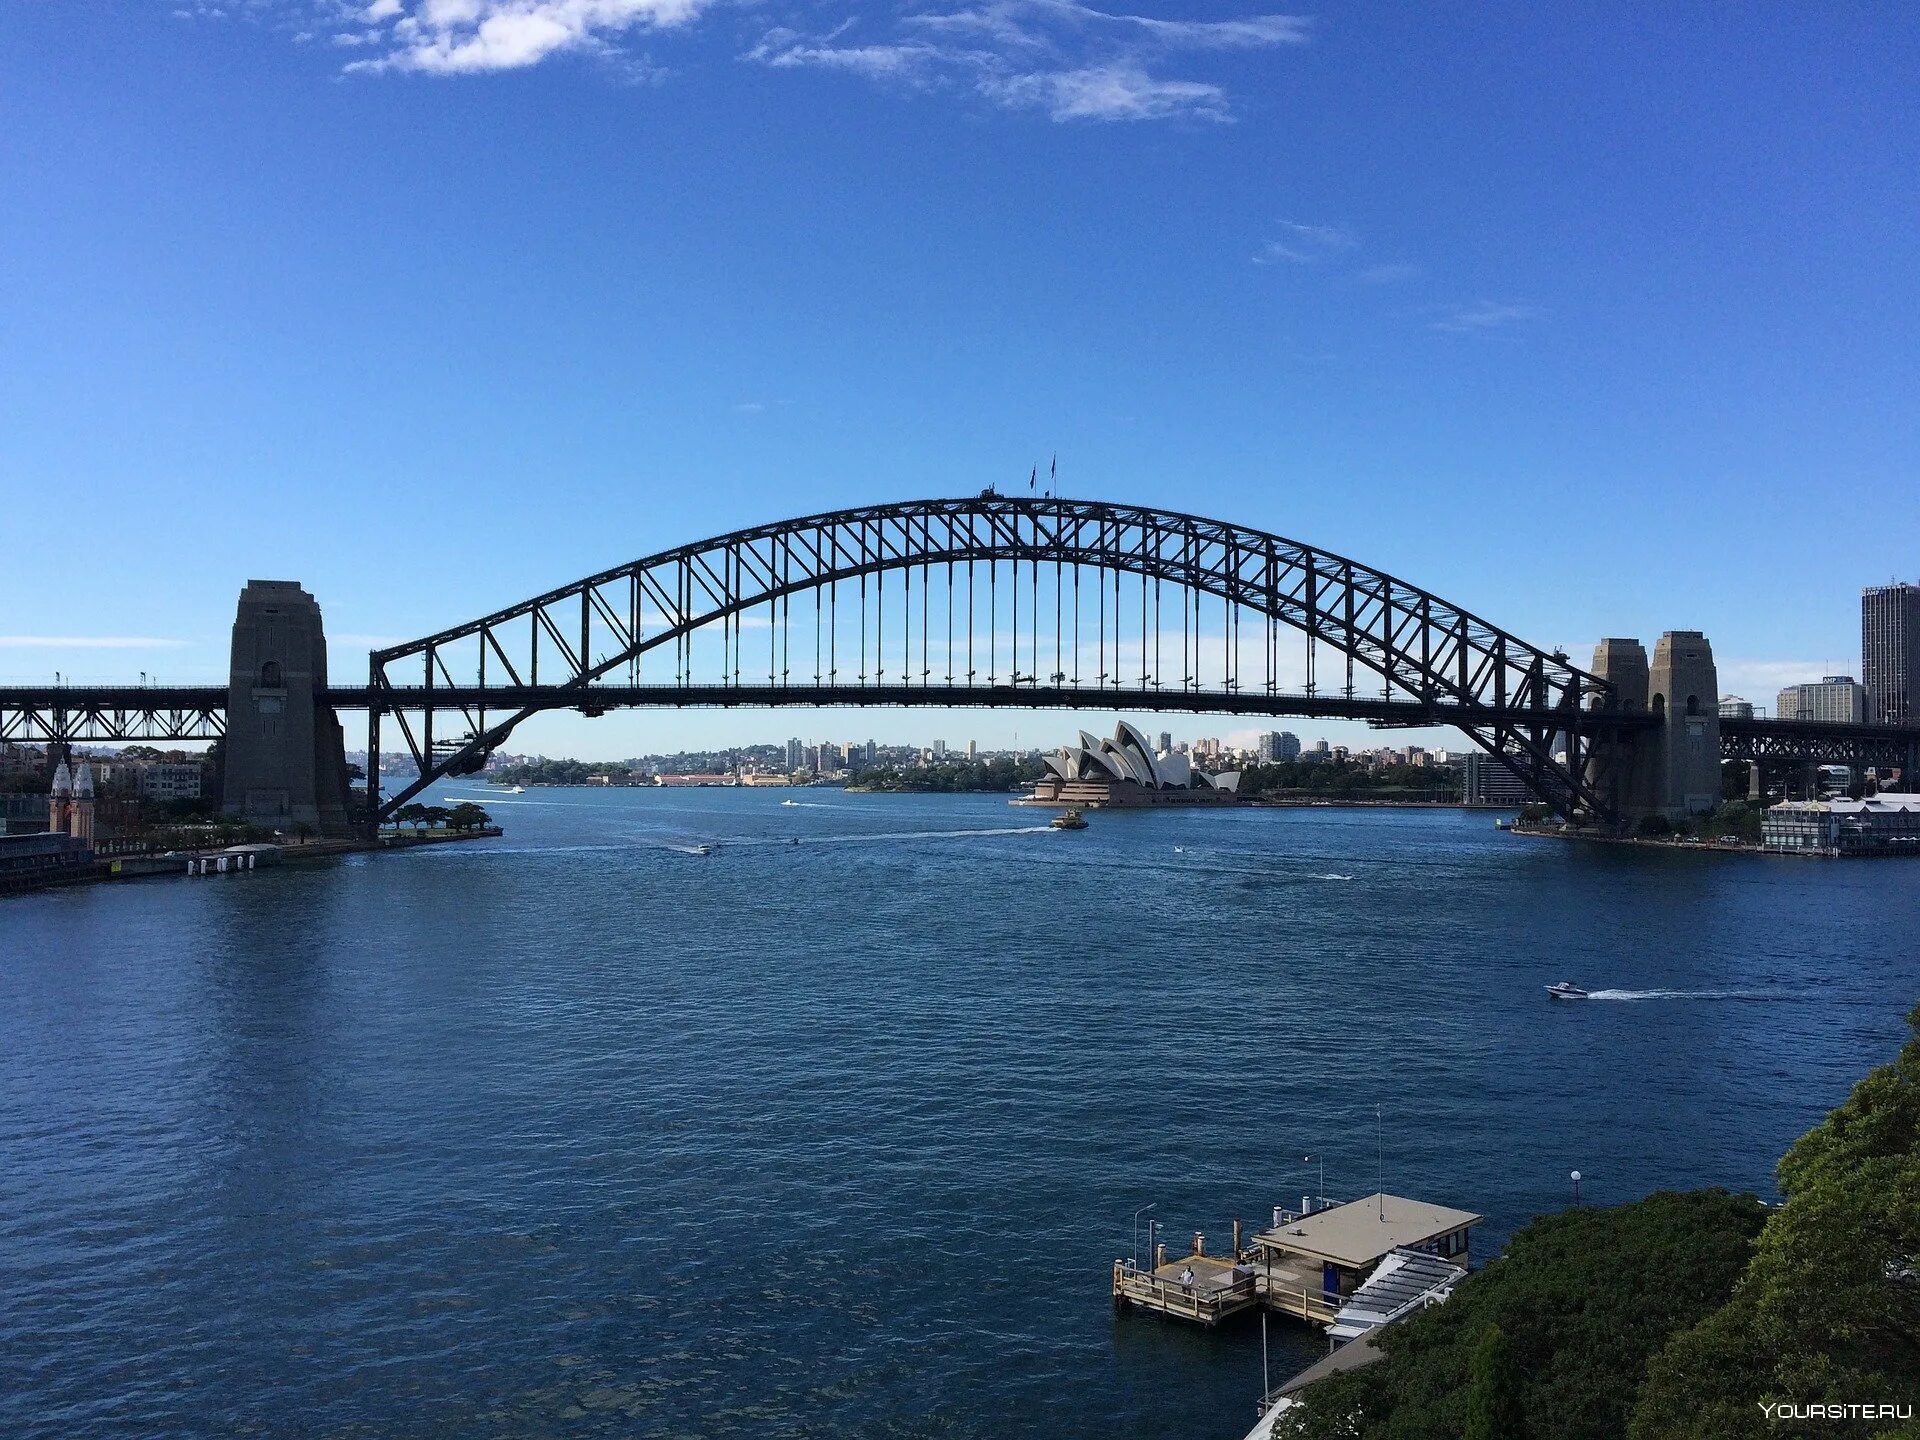 Harbour bridge. Сиднейский Харбор-бридж, Австралия. Сиднейский мост Харбор-бридж. Мост Харбор бридж в Австралии. Австралия мост Харбор бридж (г. Сидней).